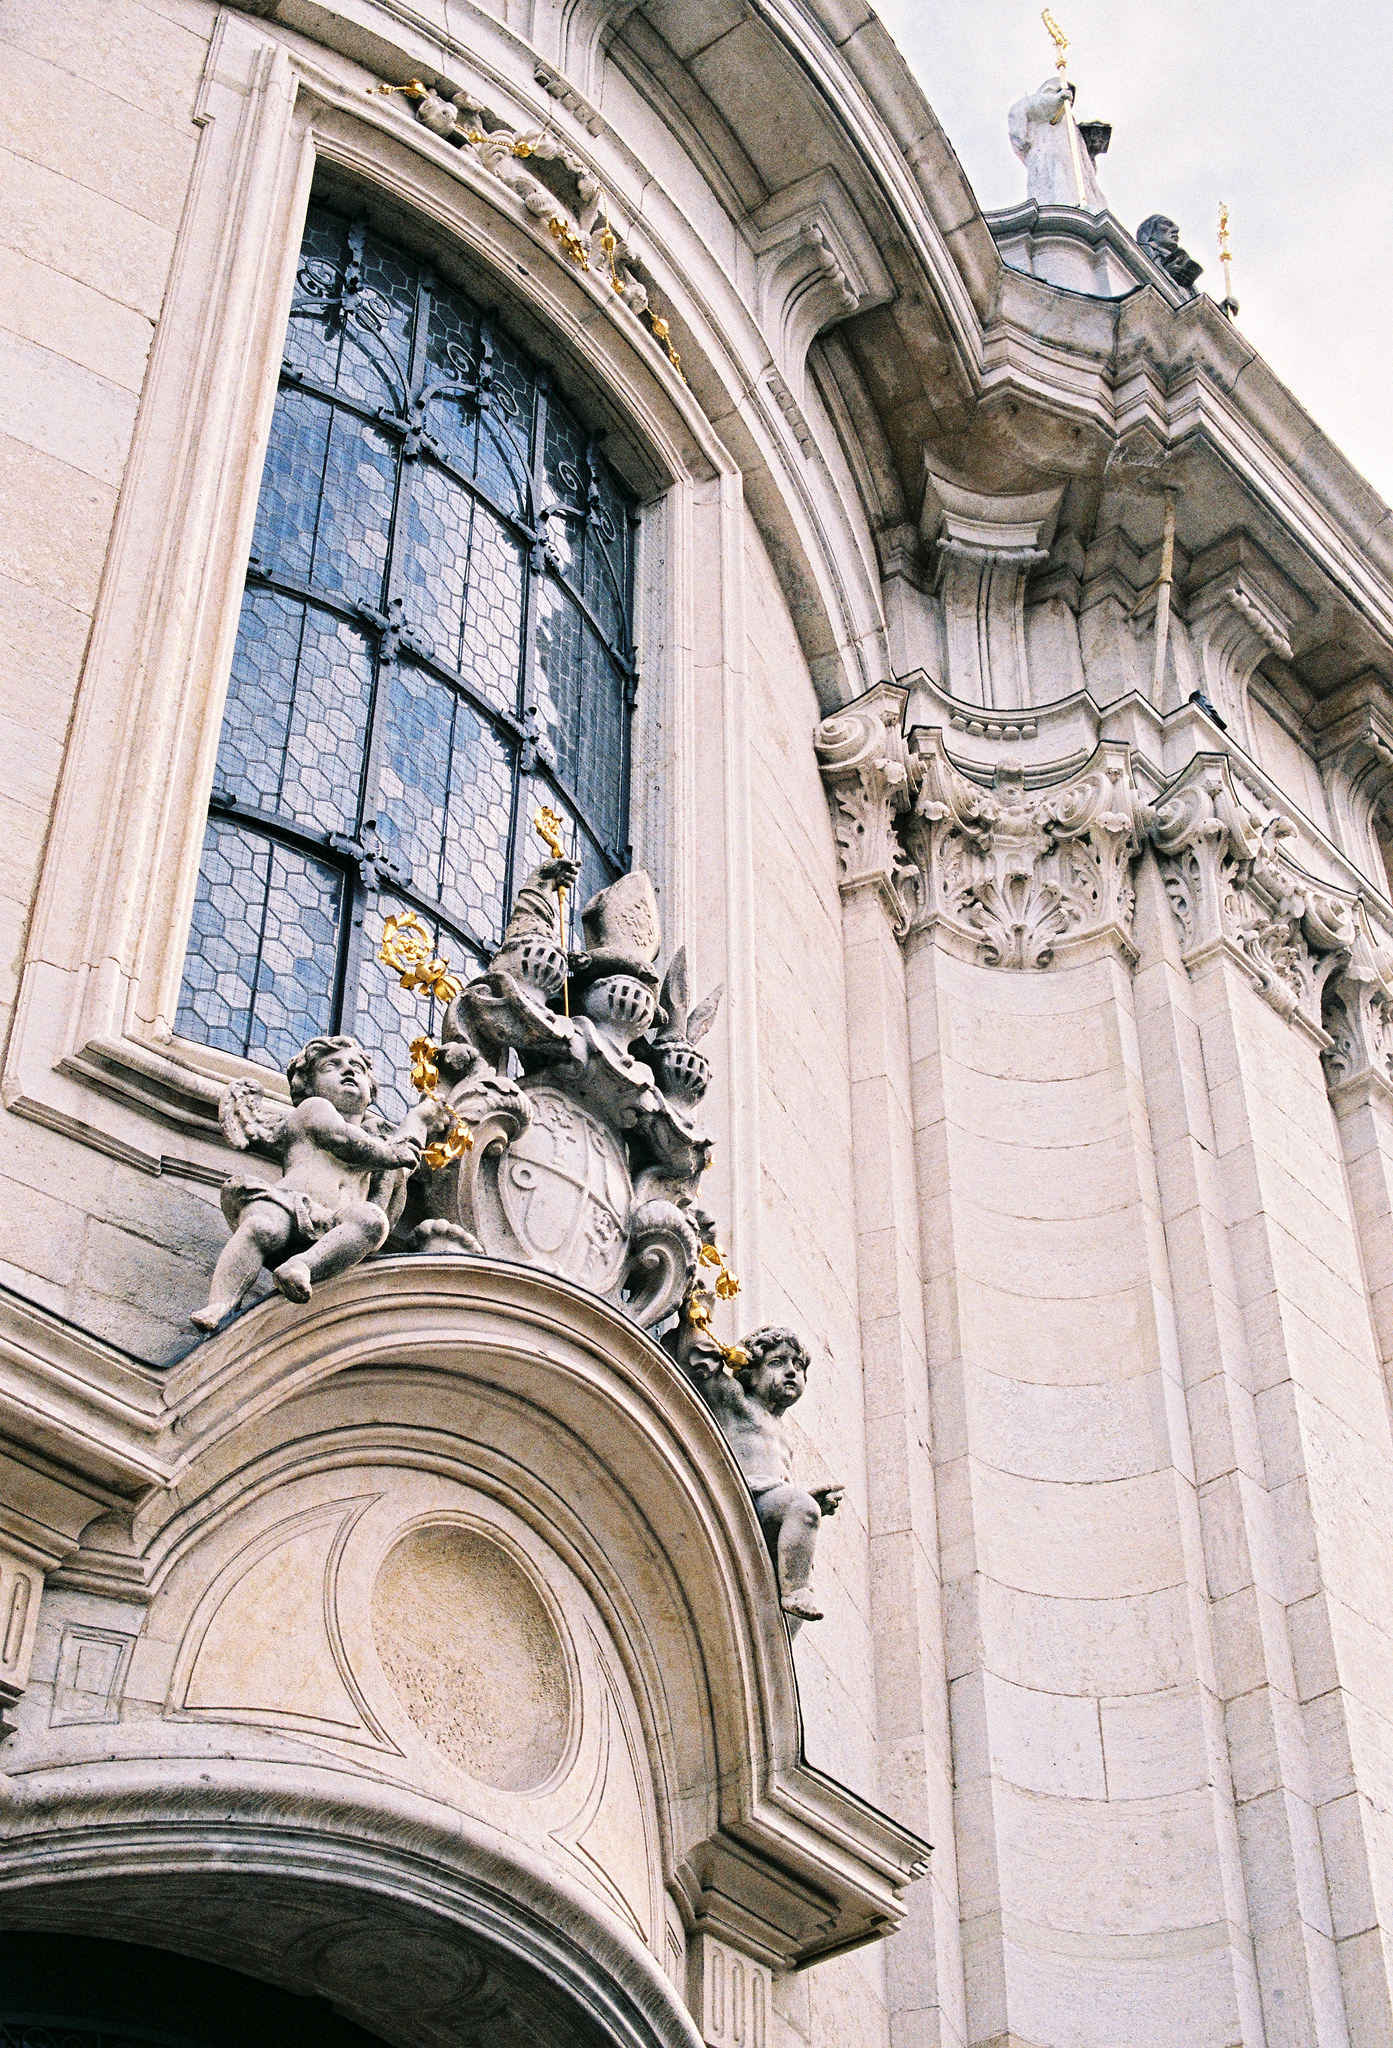 Barocke Architektur (baroque architecture)